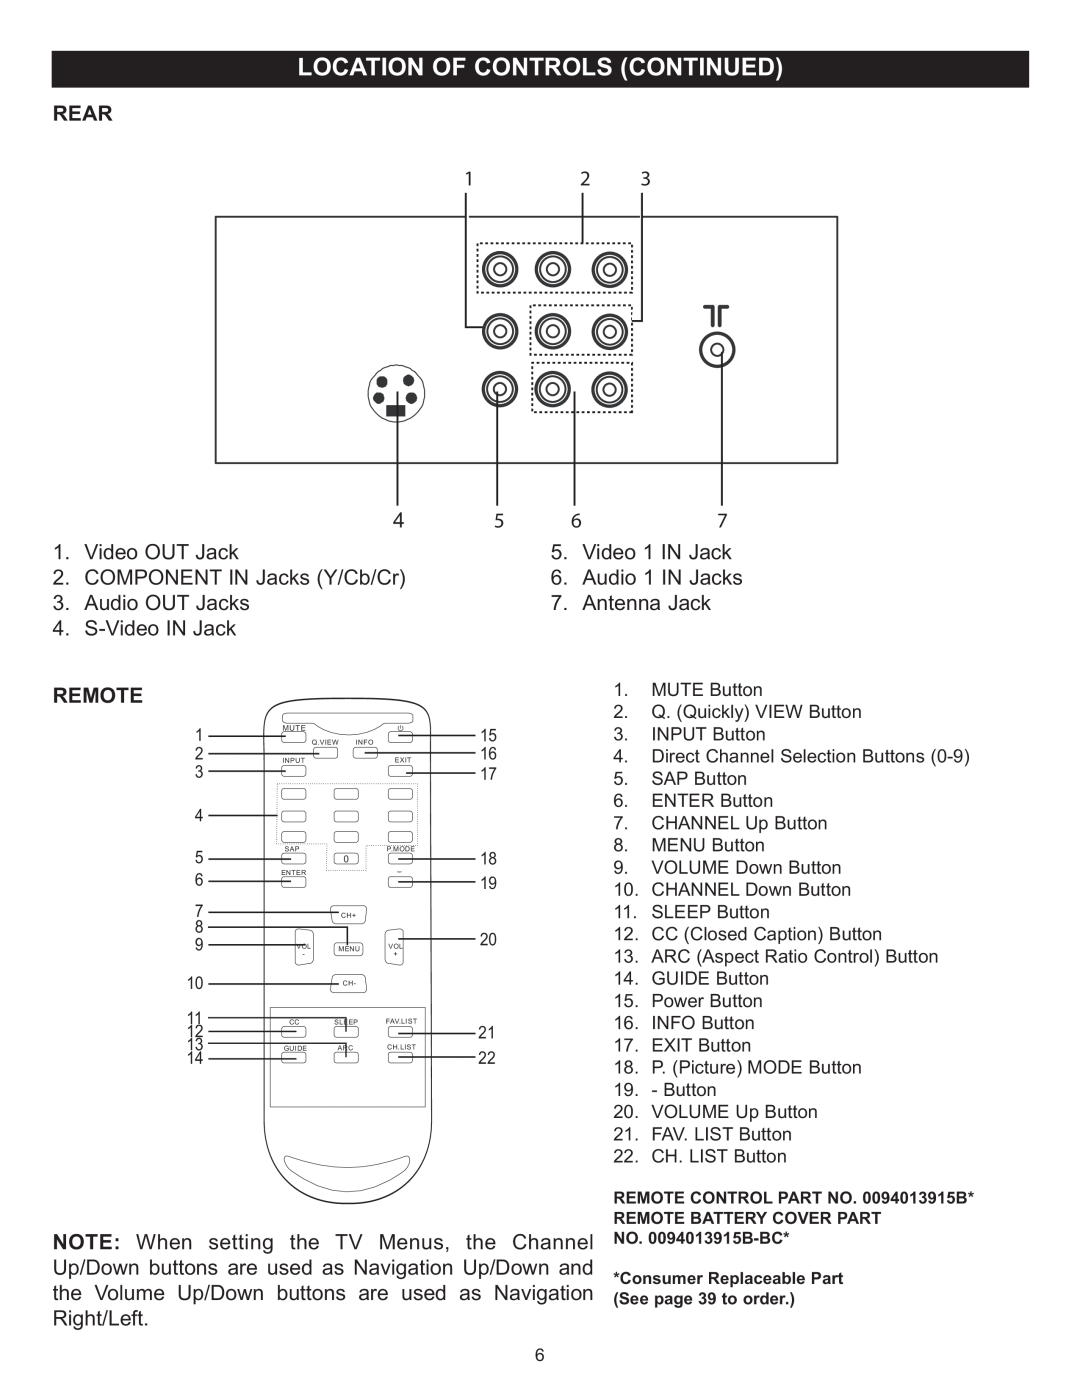 Memorex MT2028D-BLK manual Rear, Remote, Video OUT Jack, Video 1 IN Jack, COMPONENT IN Jacks Y/Cb/Cr, Audio 1 IN Jacks 